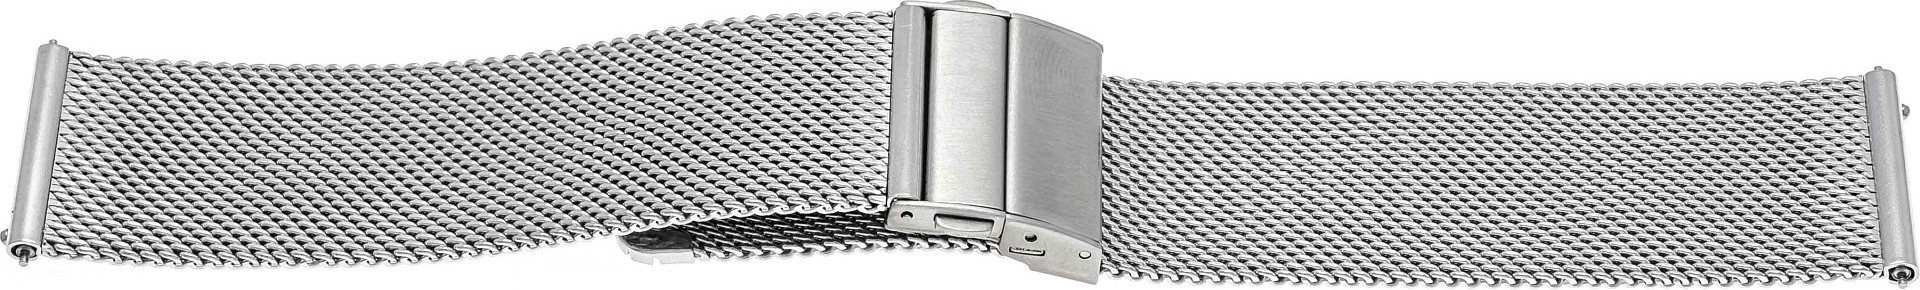  Milanaise Watchband metall silver 